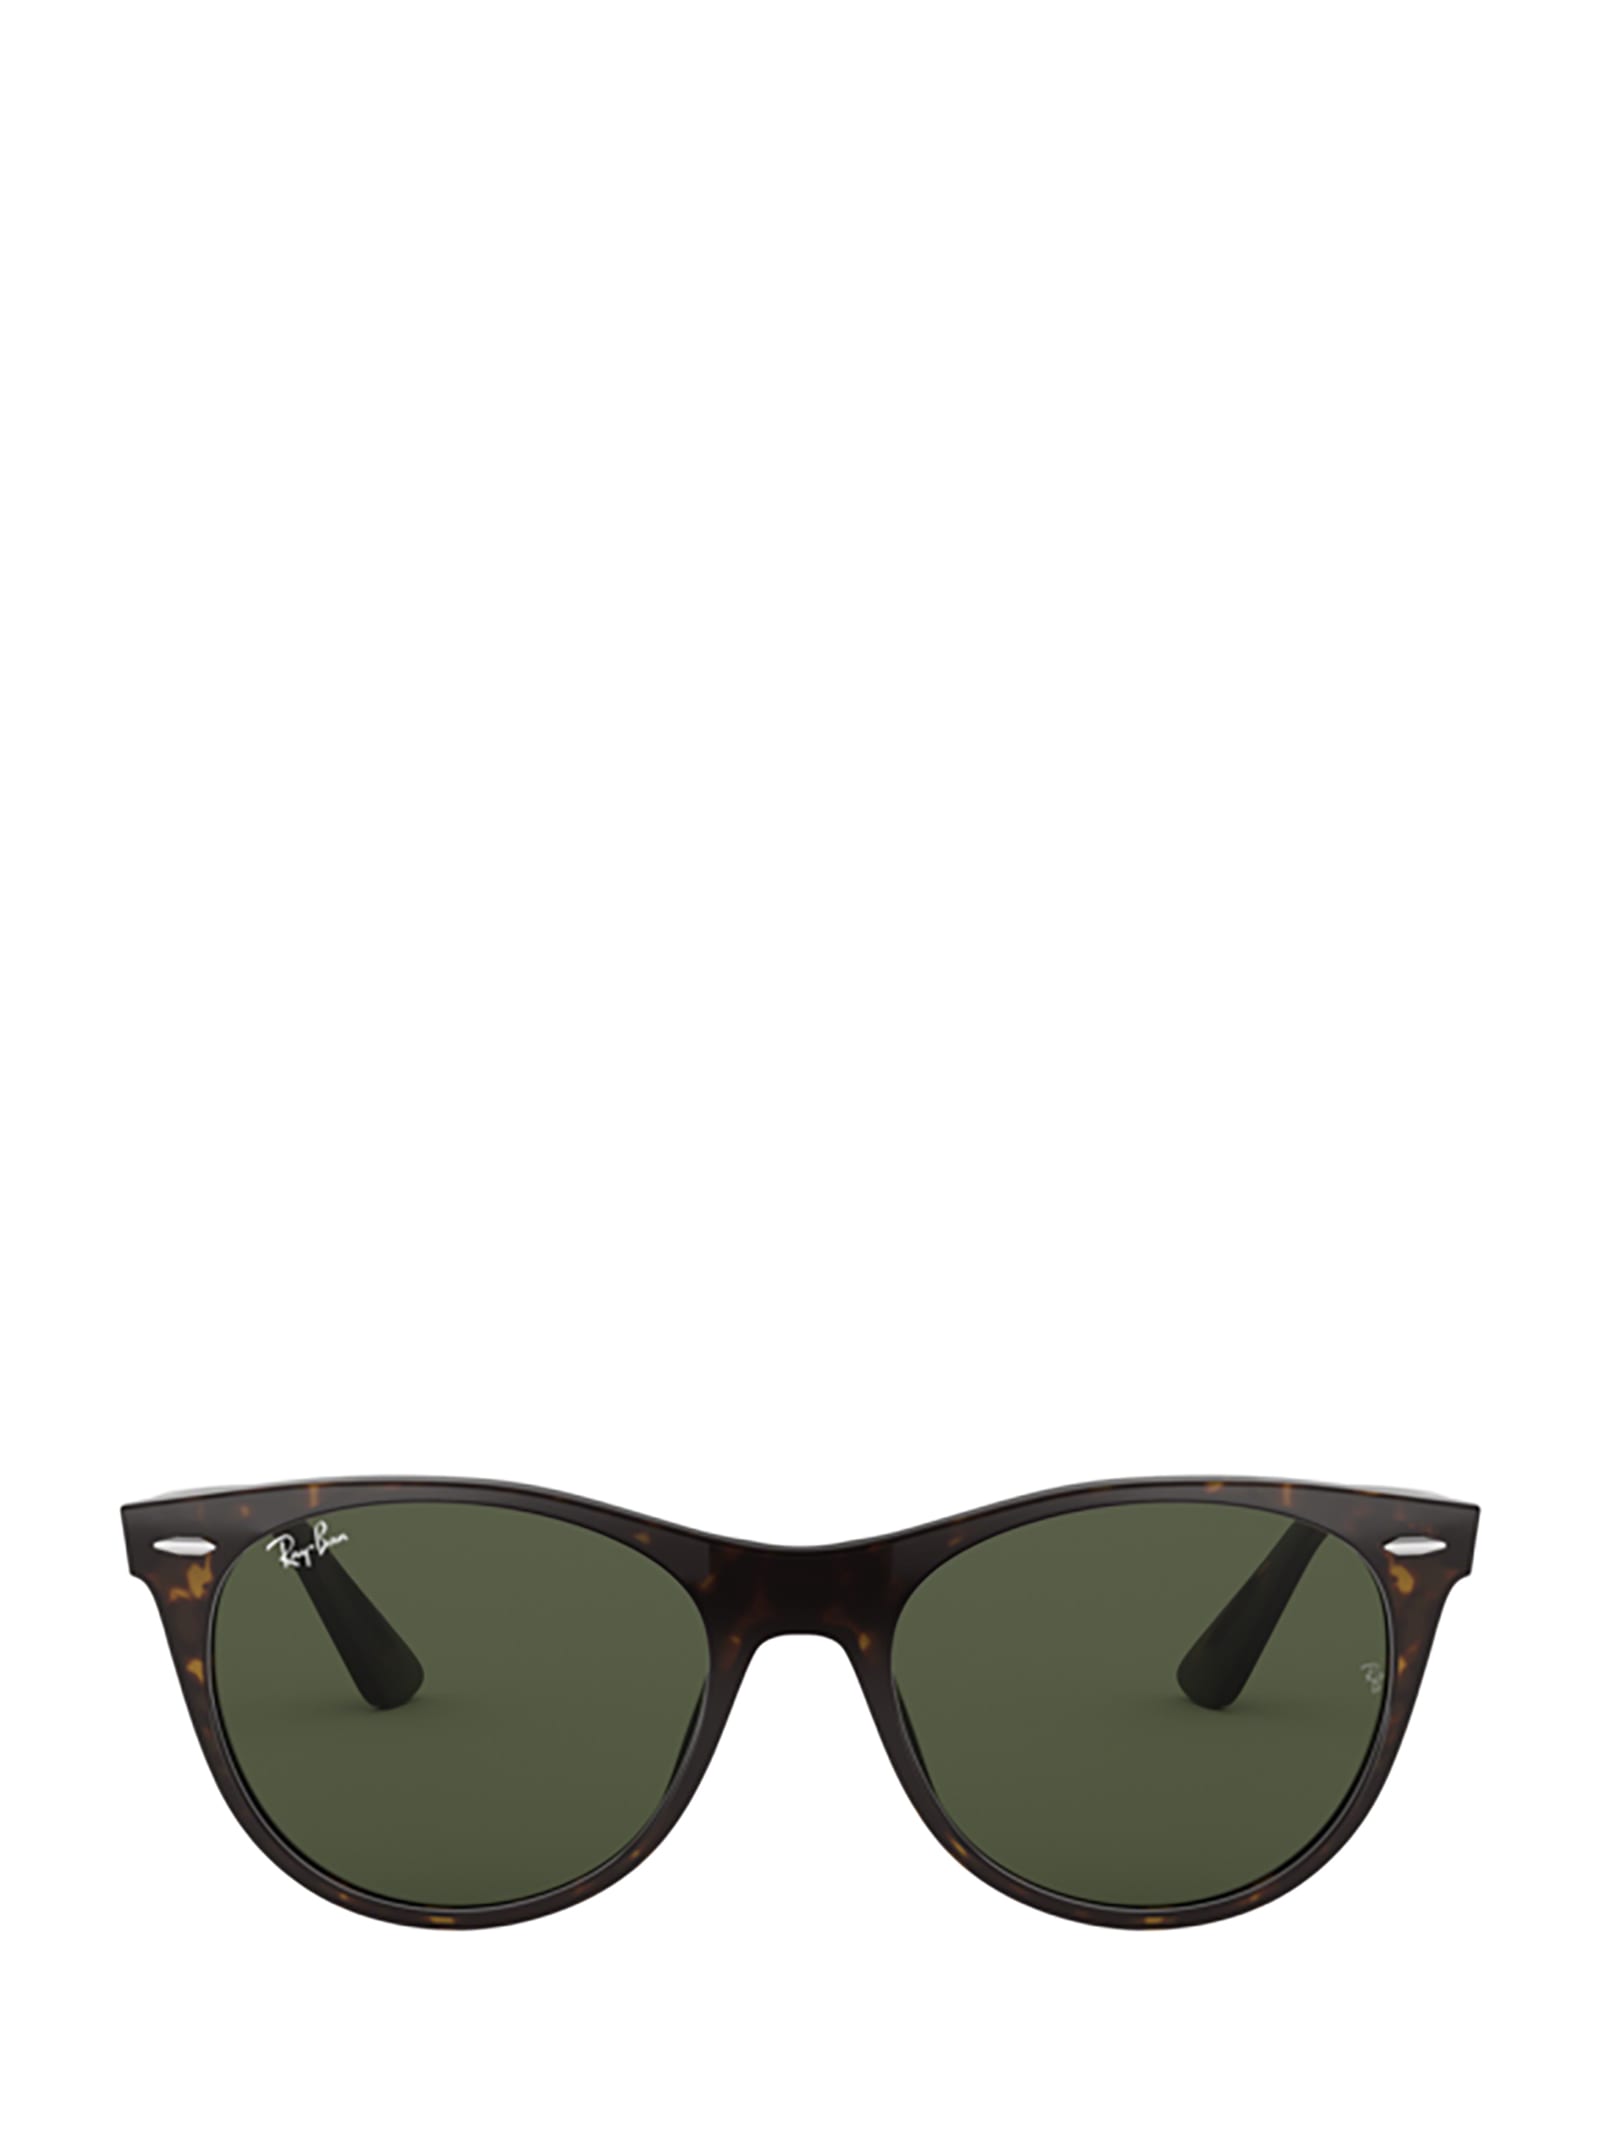 Ray-Ban Ray-ban Rb2185 Tortoise Sunglasses